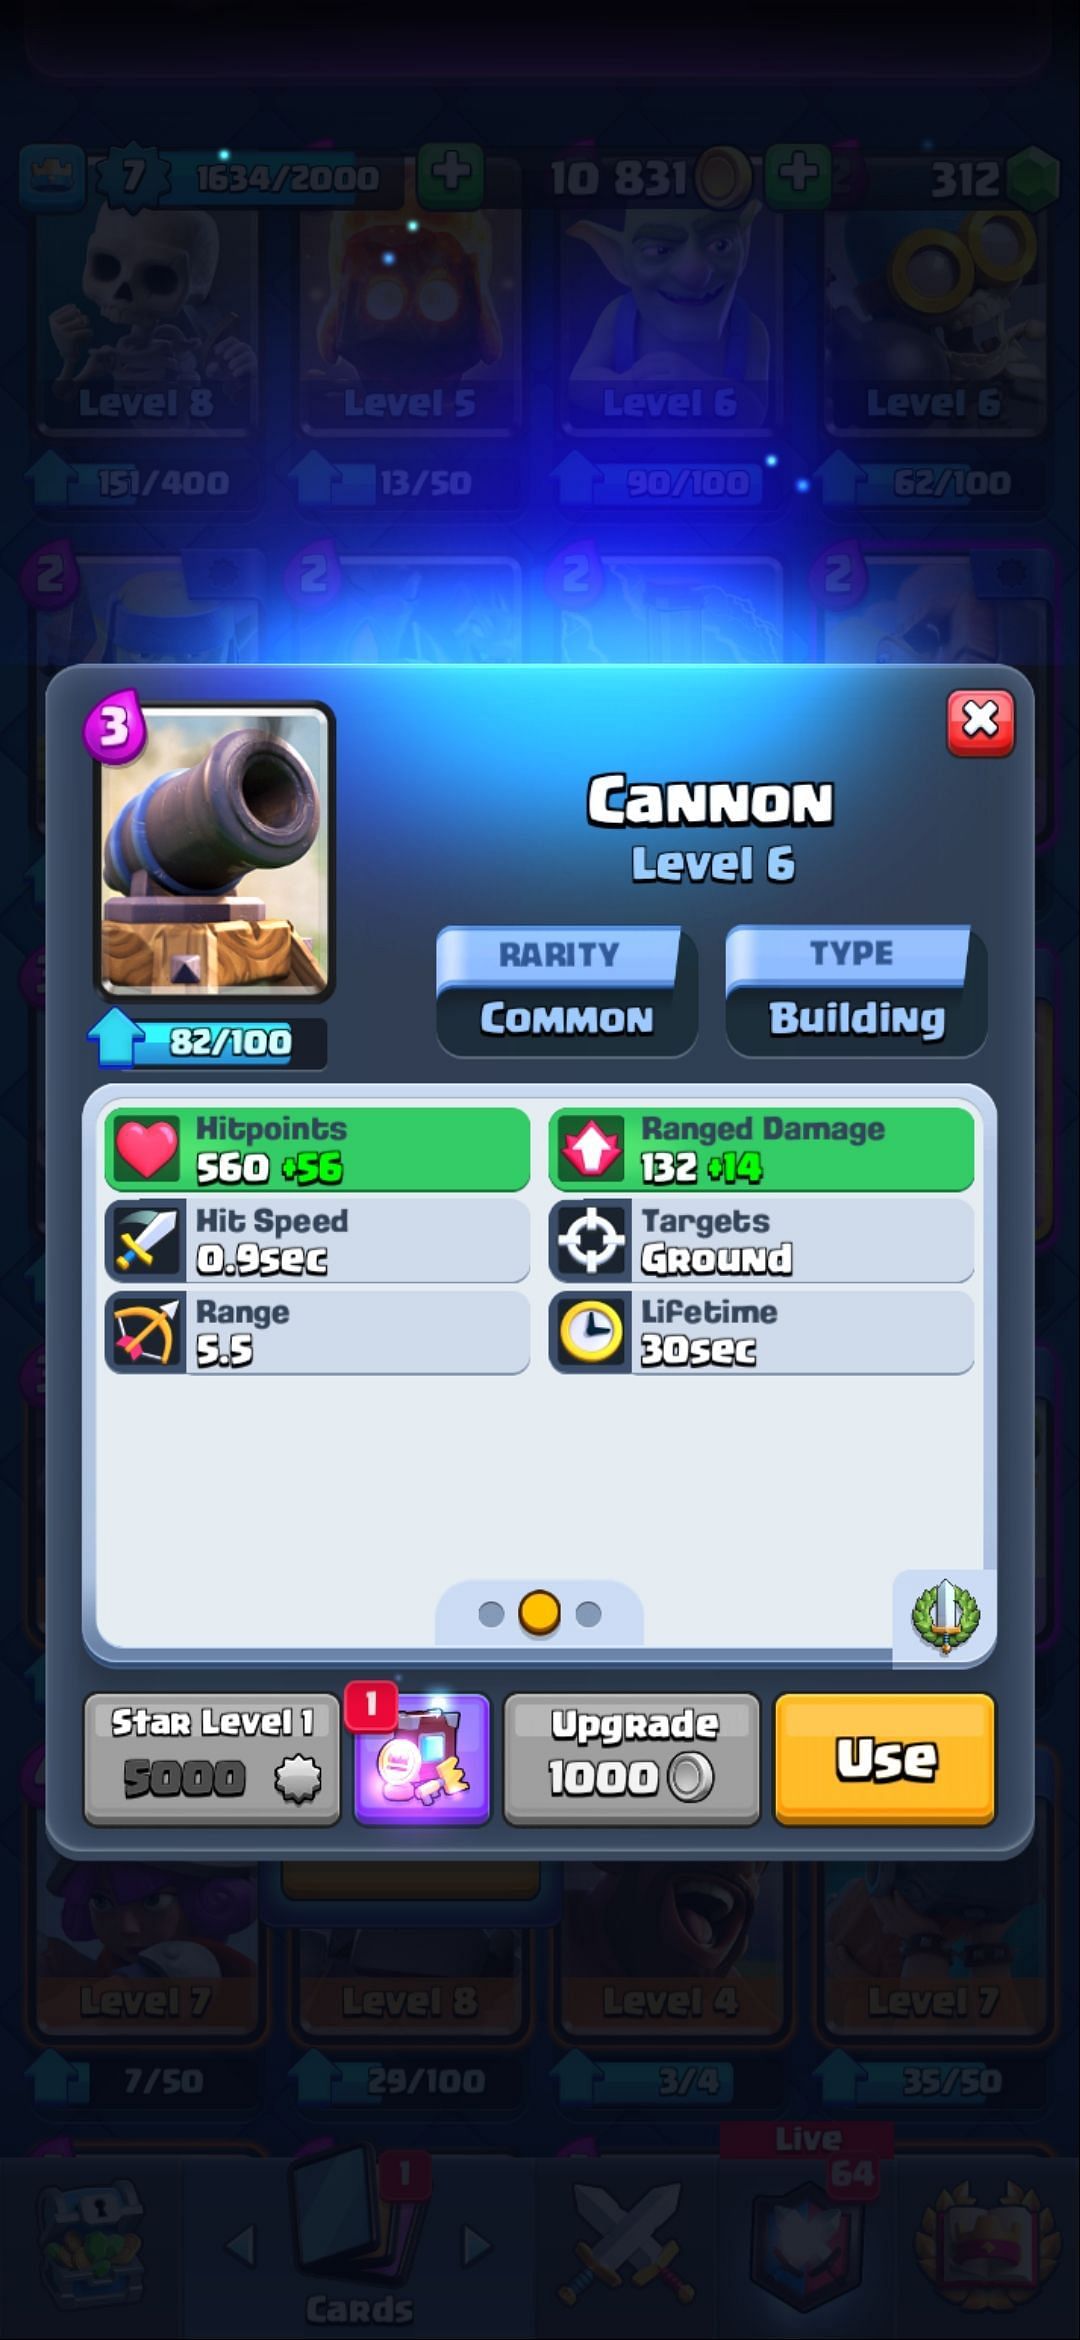 The Cannon card in Clash Royale (Image via Sportskeeda)